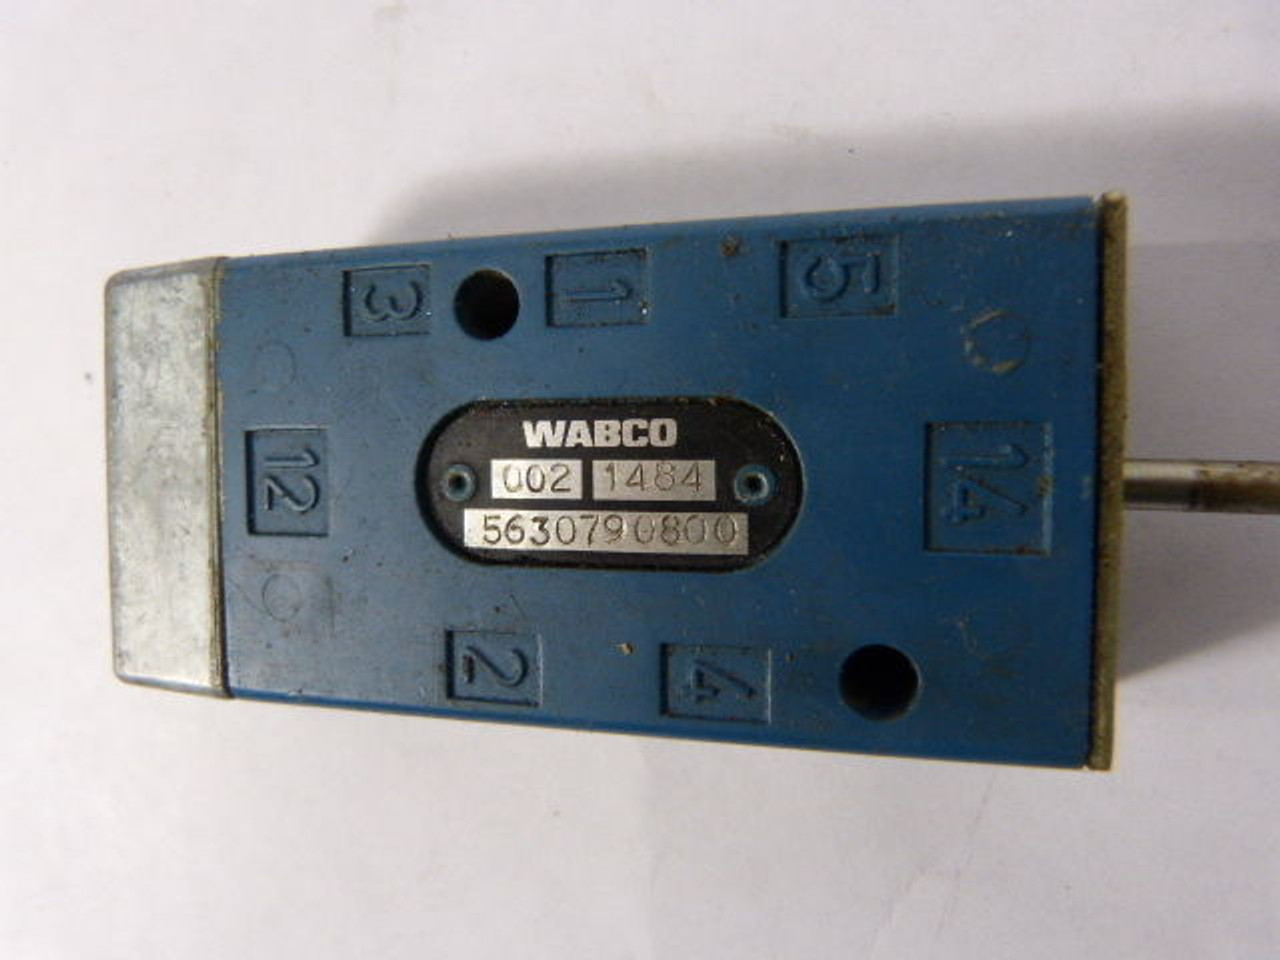 Wabco 002-1484 Solenoid Valve USED